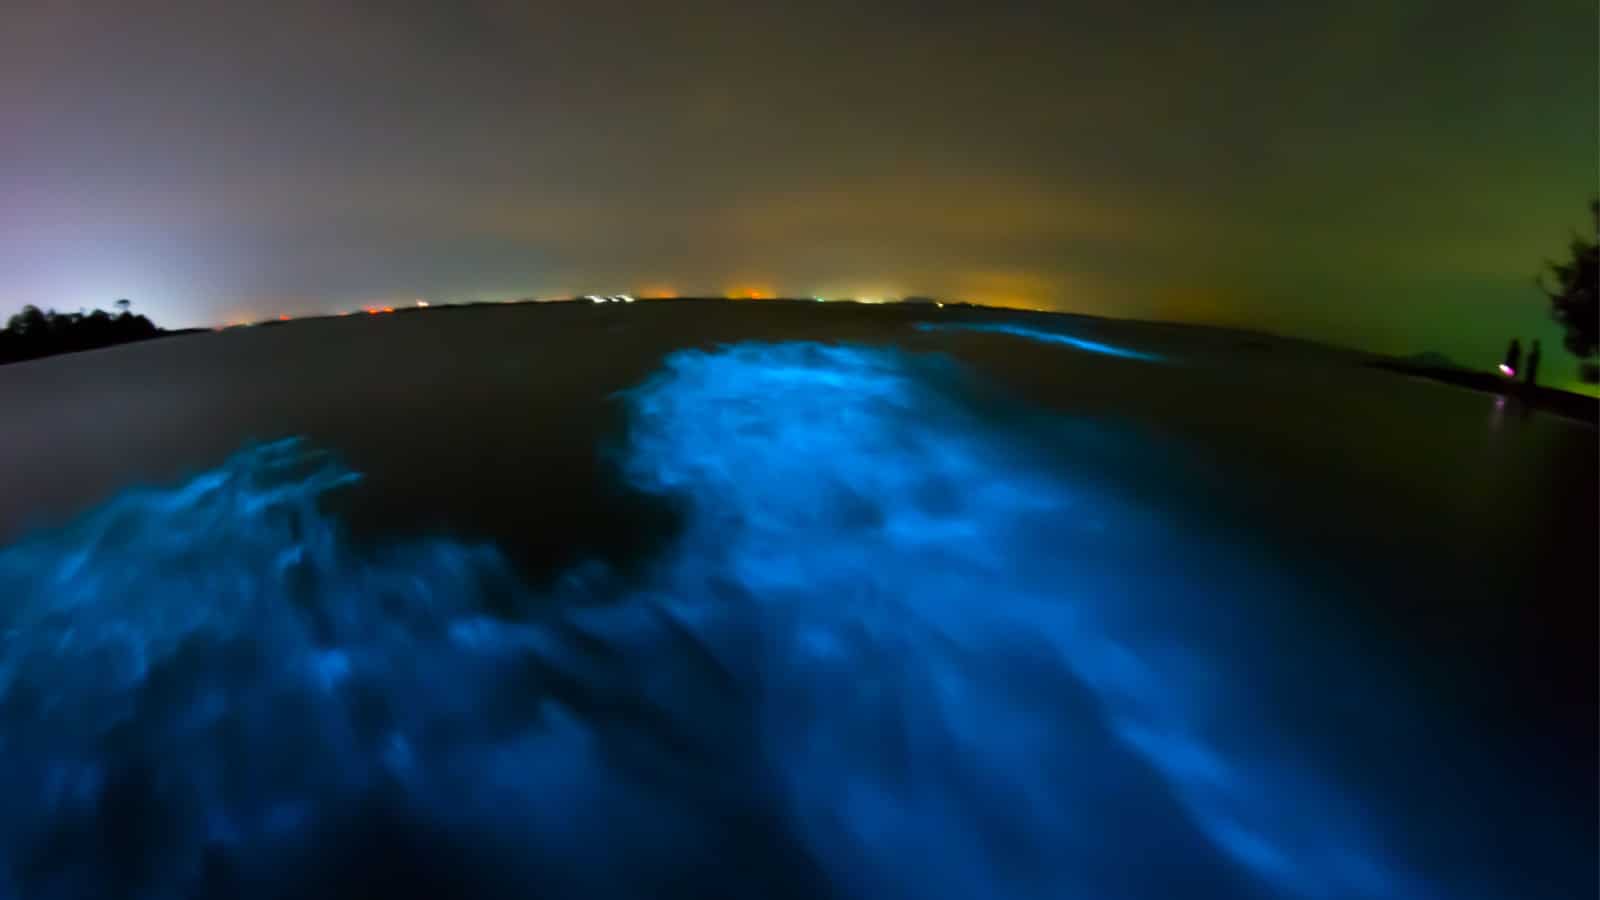 Bioluminescence in night sea water. Blue fluorescent wave of bioluminescent plankton, long exposure shot, Thailand.